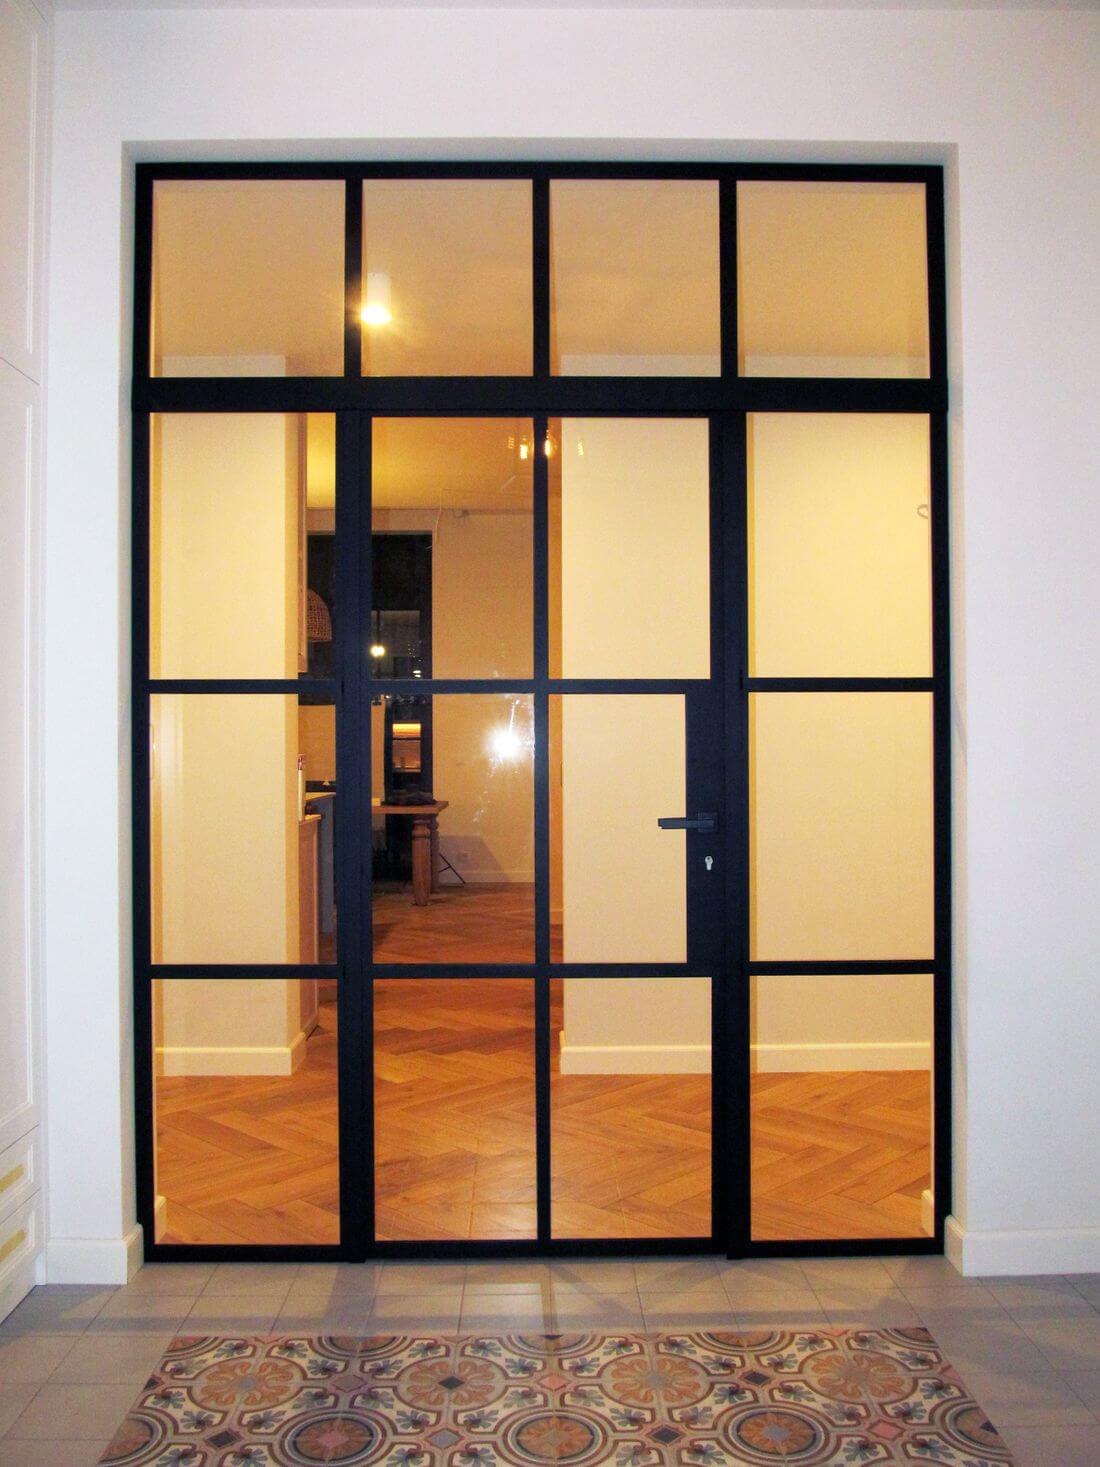 Glass Swing Loft Doors with Loft Walls illuminated by artificial light from corridor